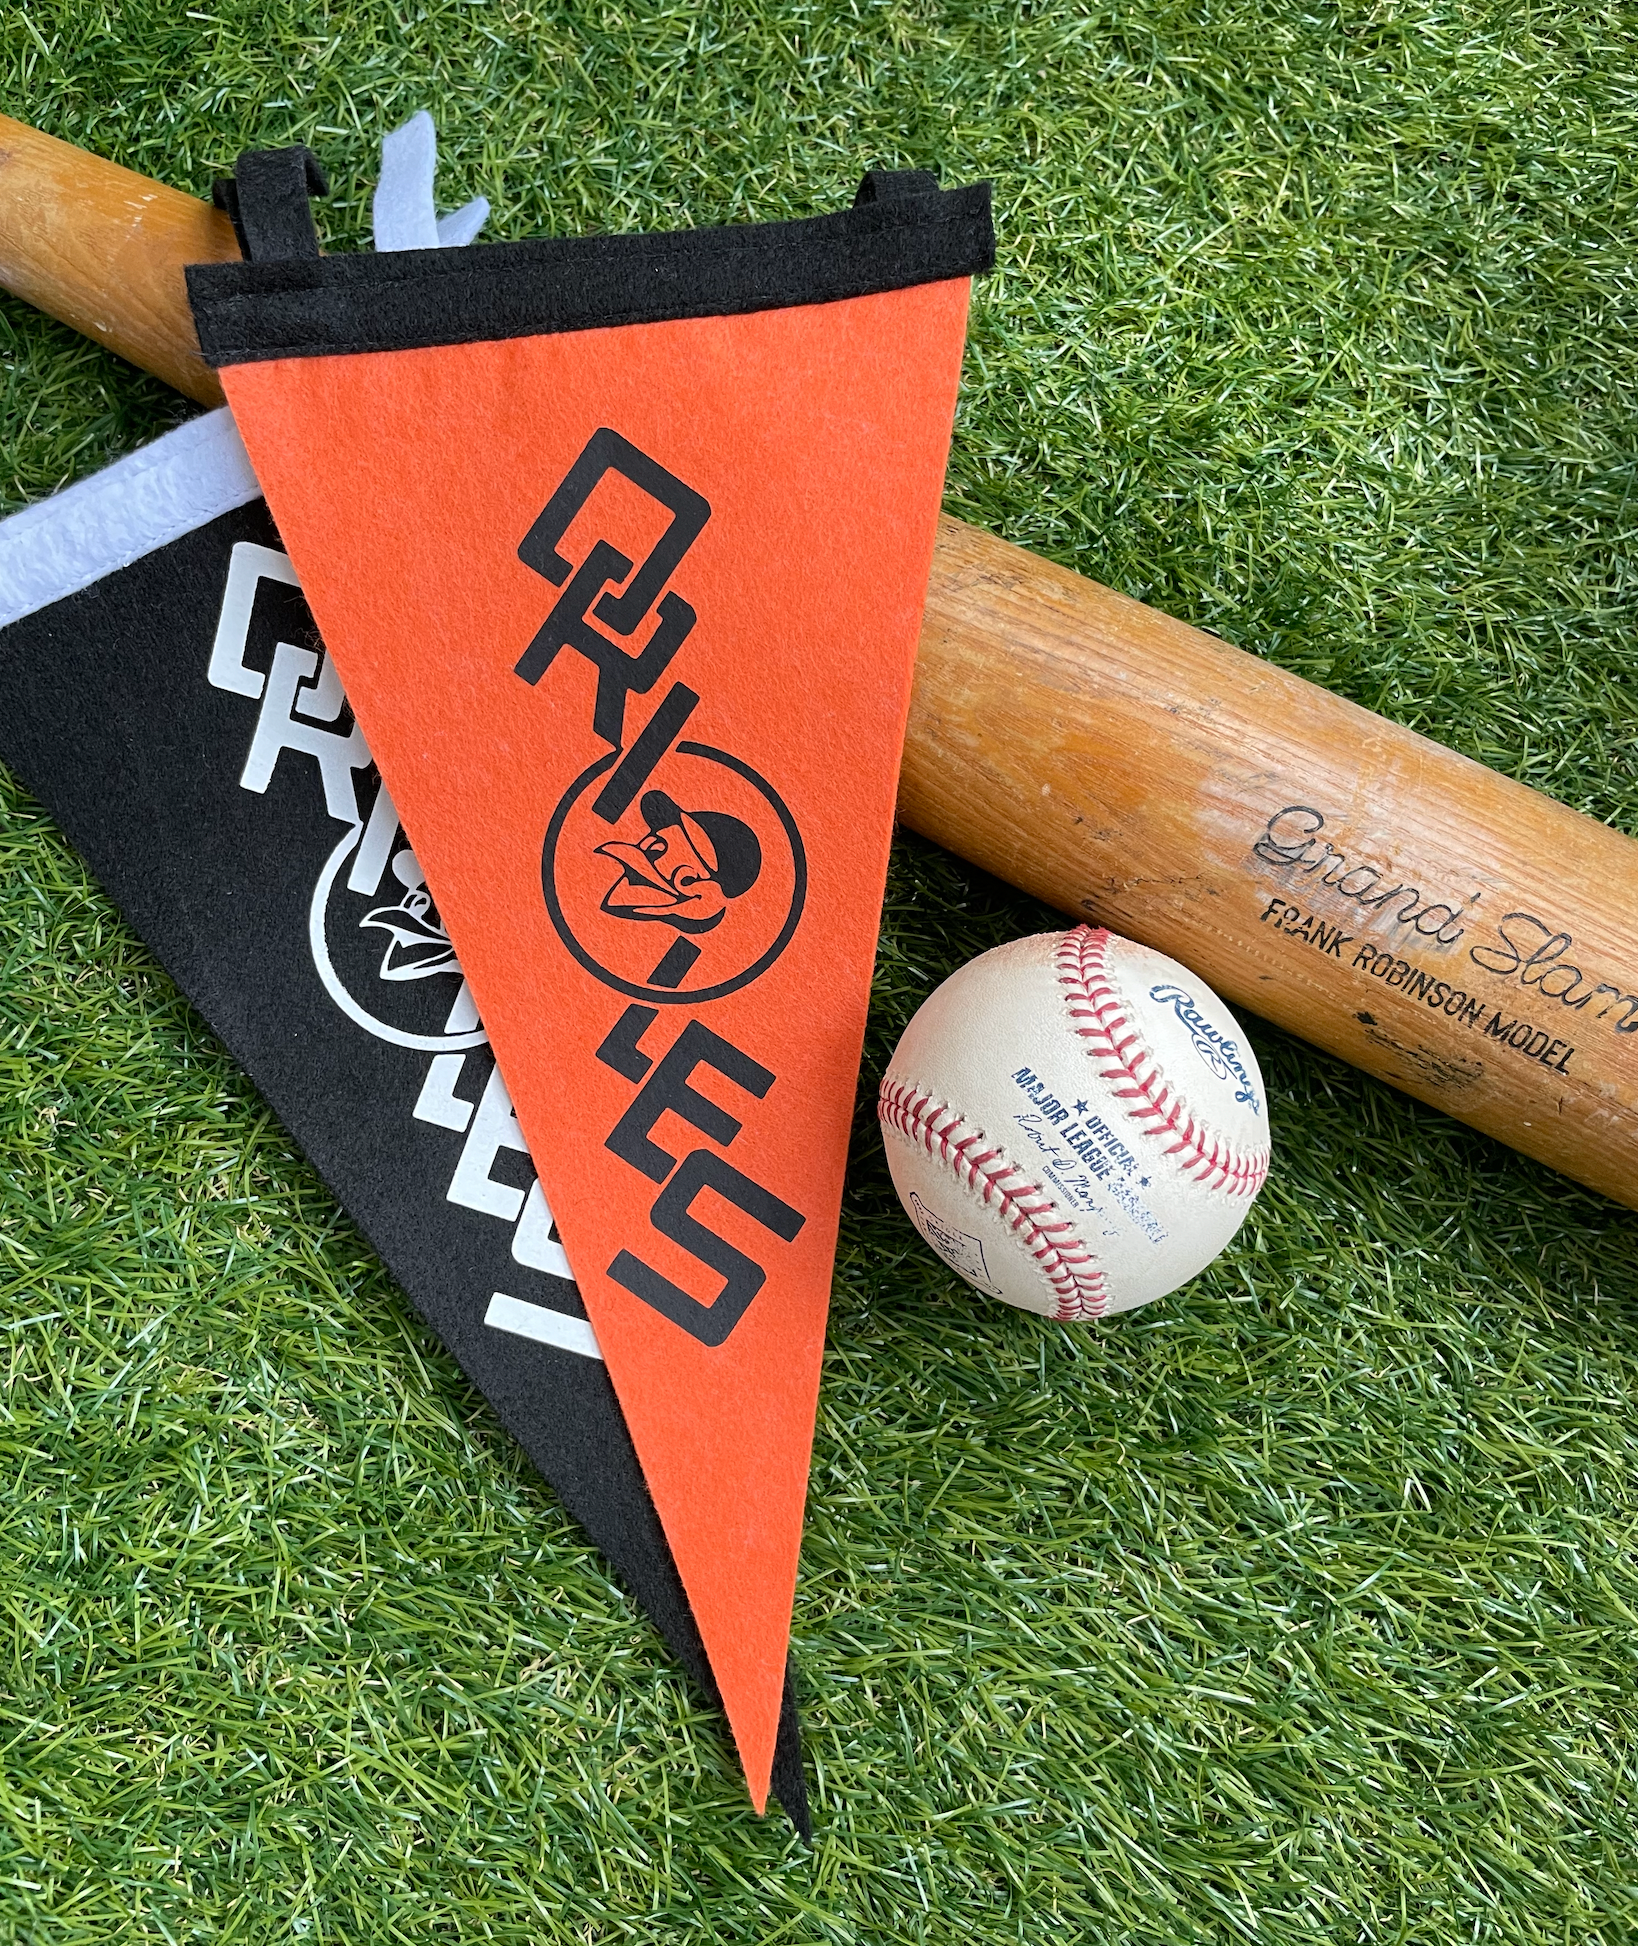 Baltimore Orioles 12-Pack Plastic Flags